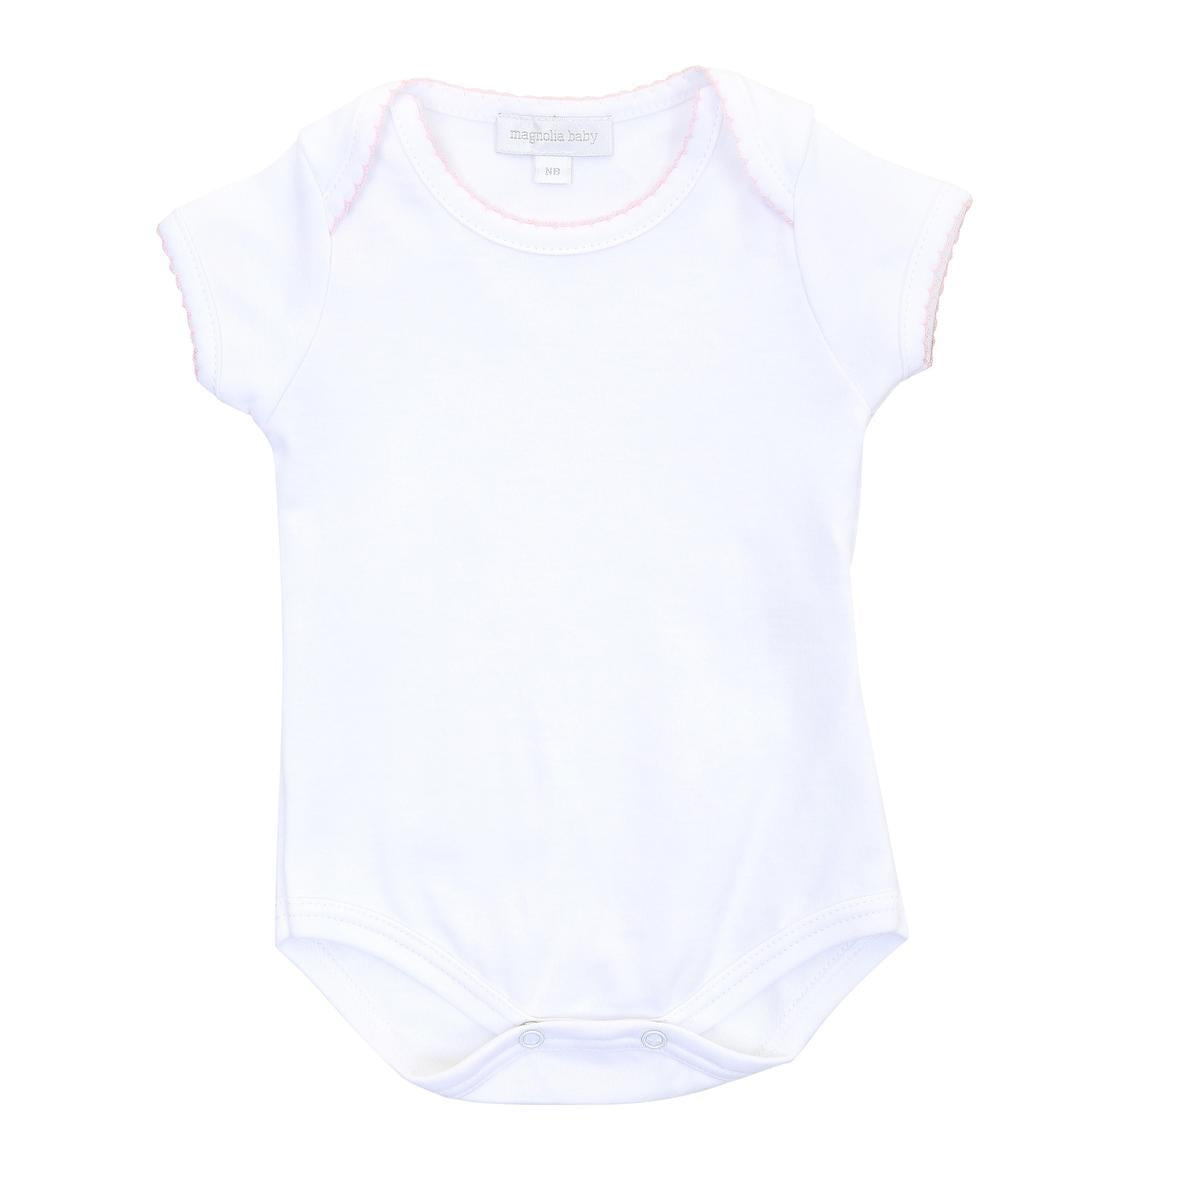 Magnolia Baby Essentials Short Sleeve Bodysuit- White with Pink